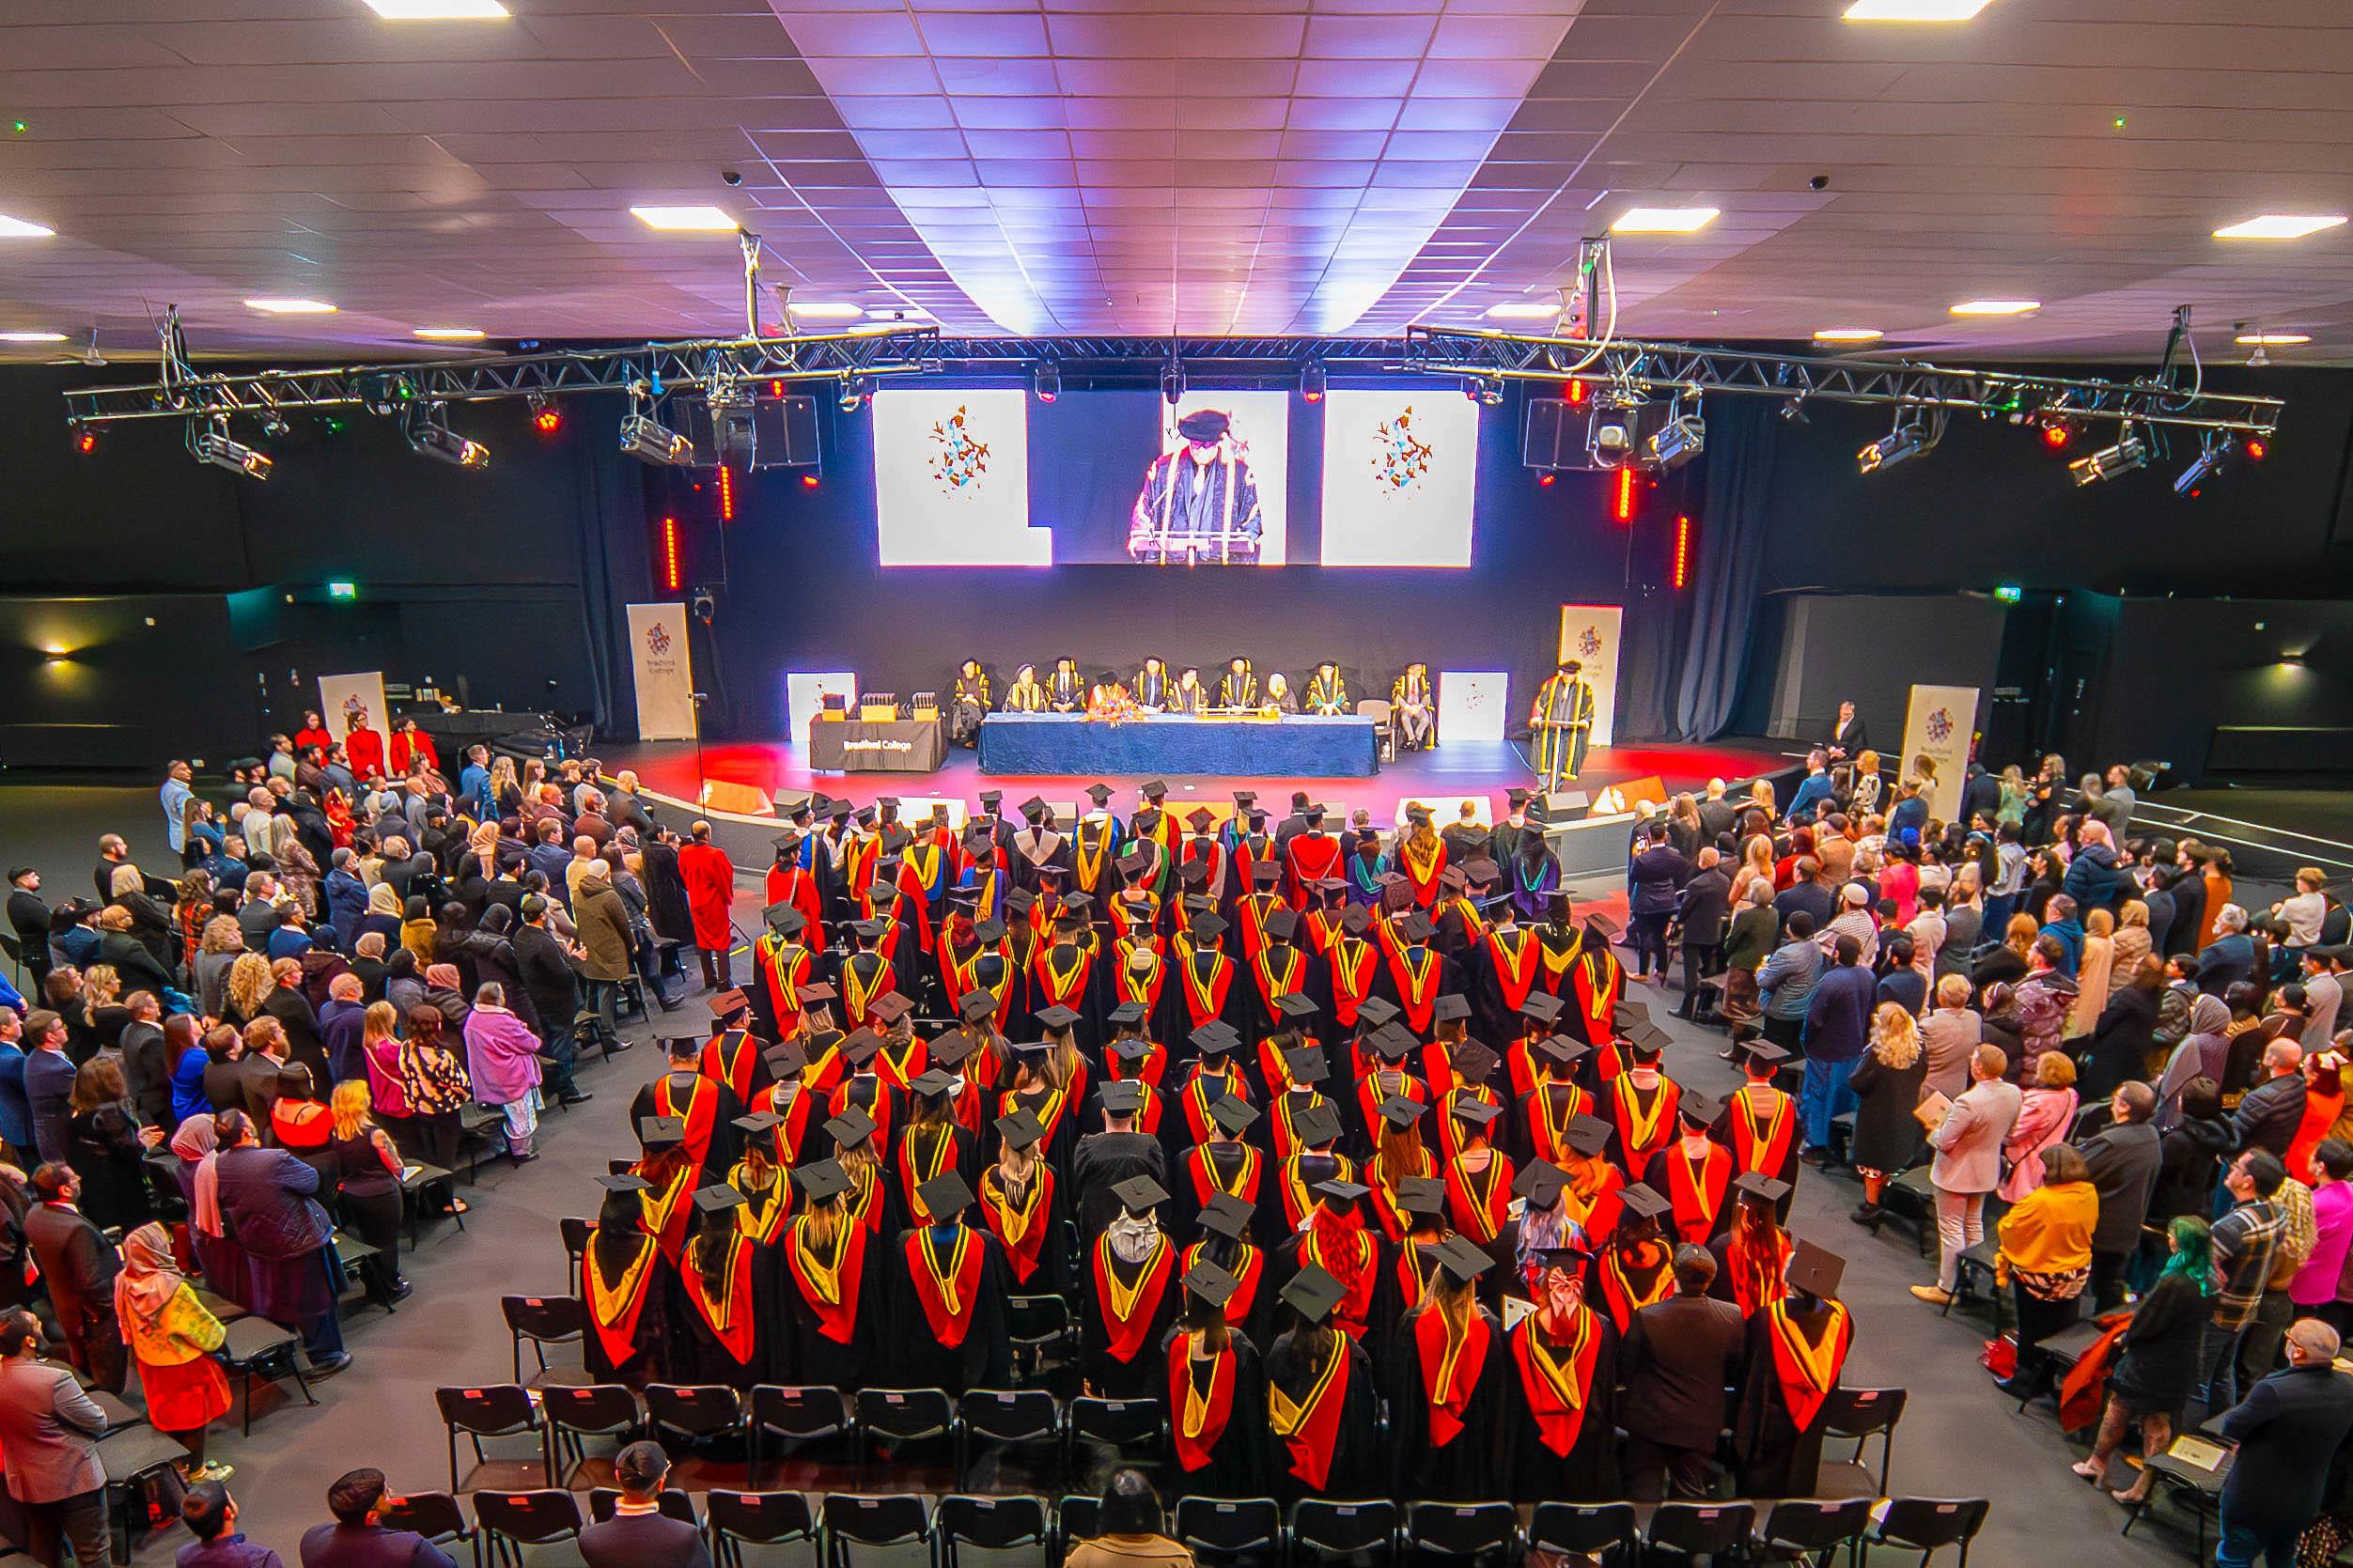 Bradford College Graduation Celebrates Over 400 Degree Graduates